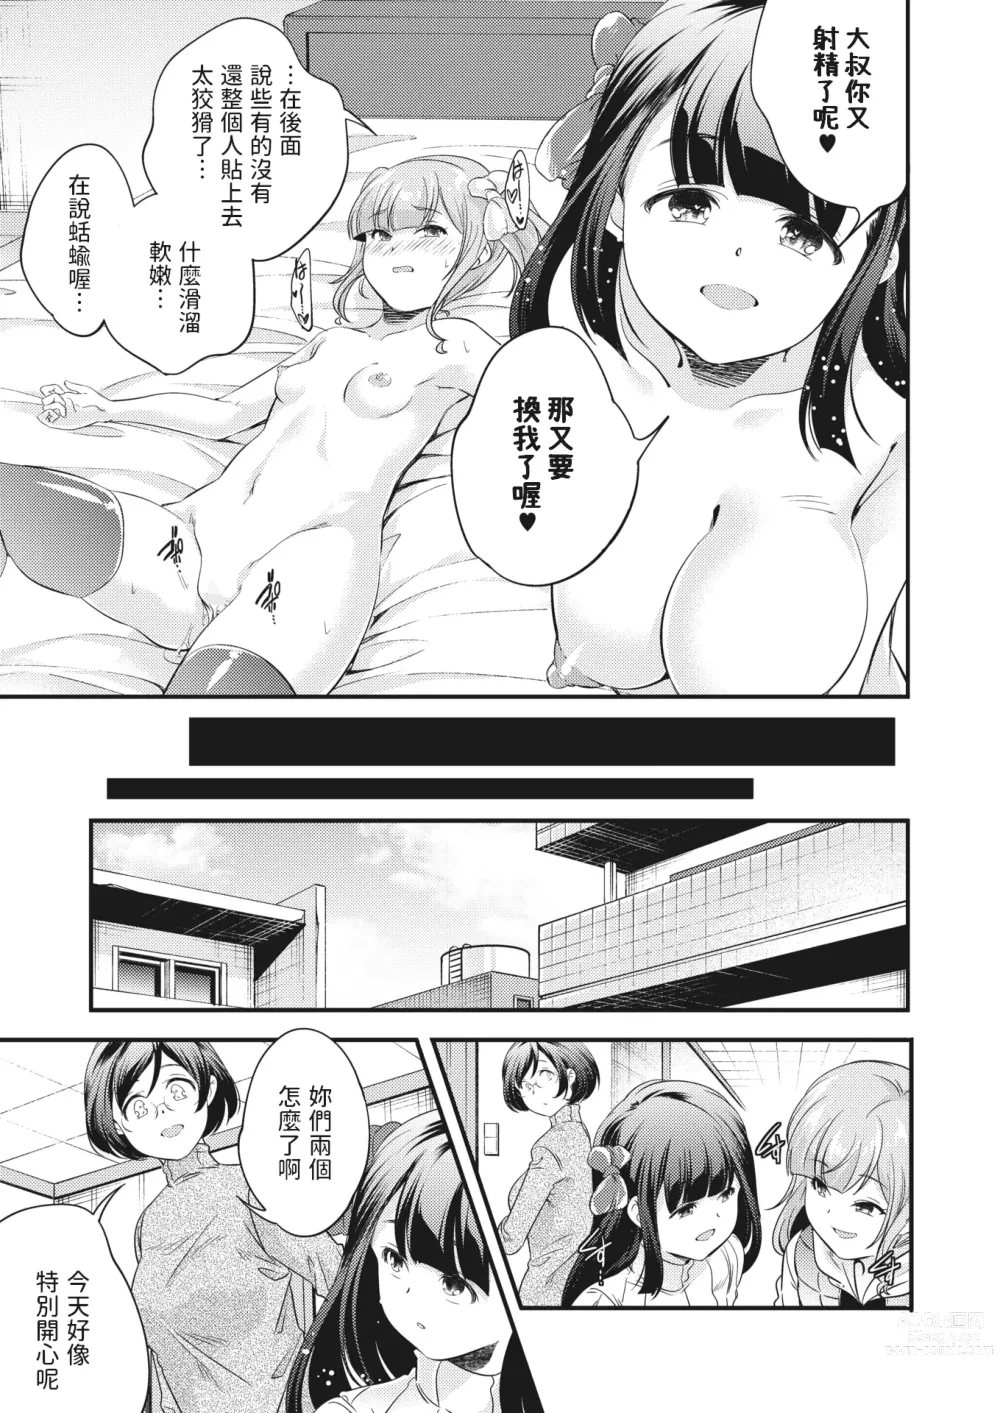 Page 21 of manga Ariadone